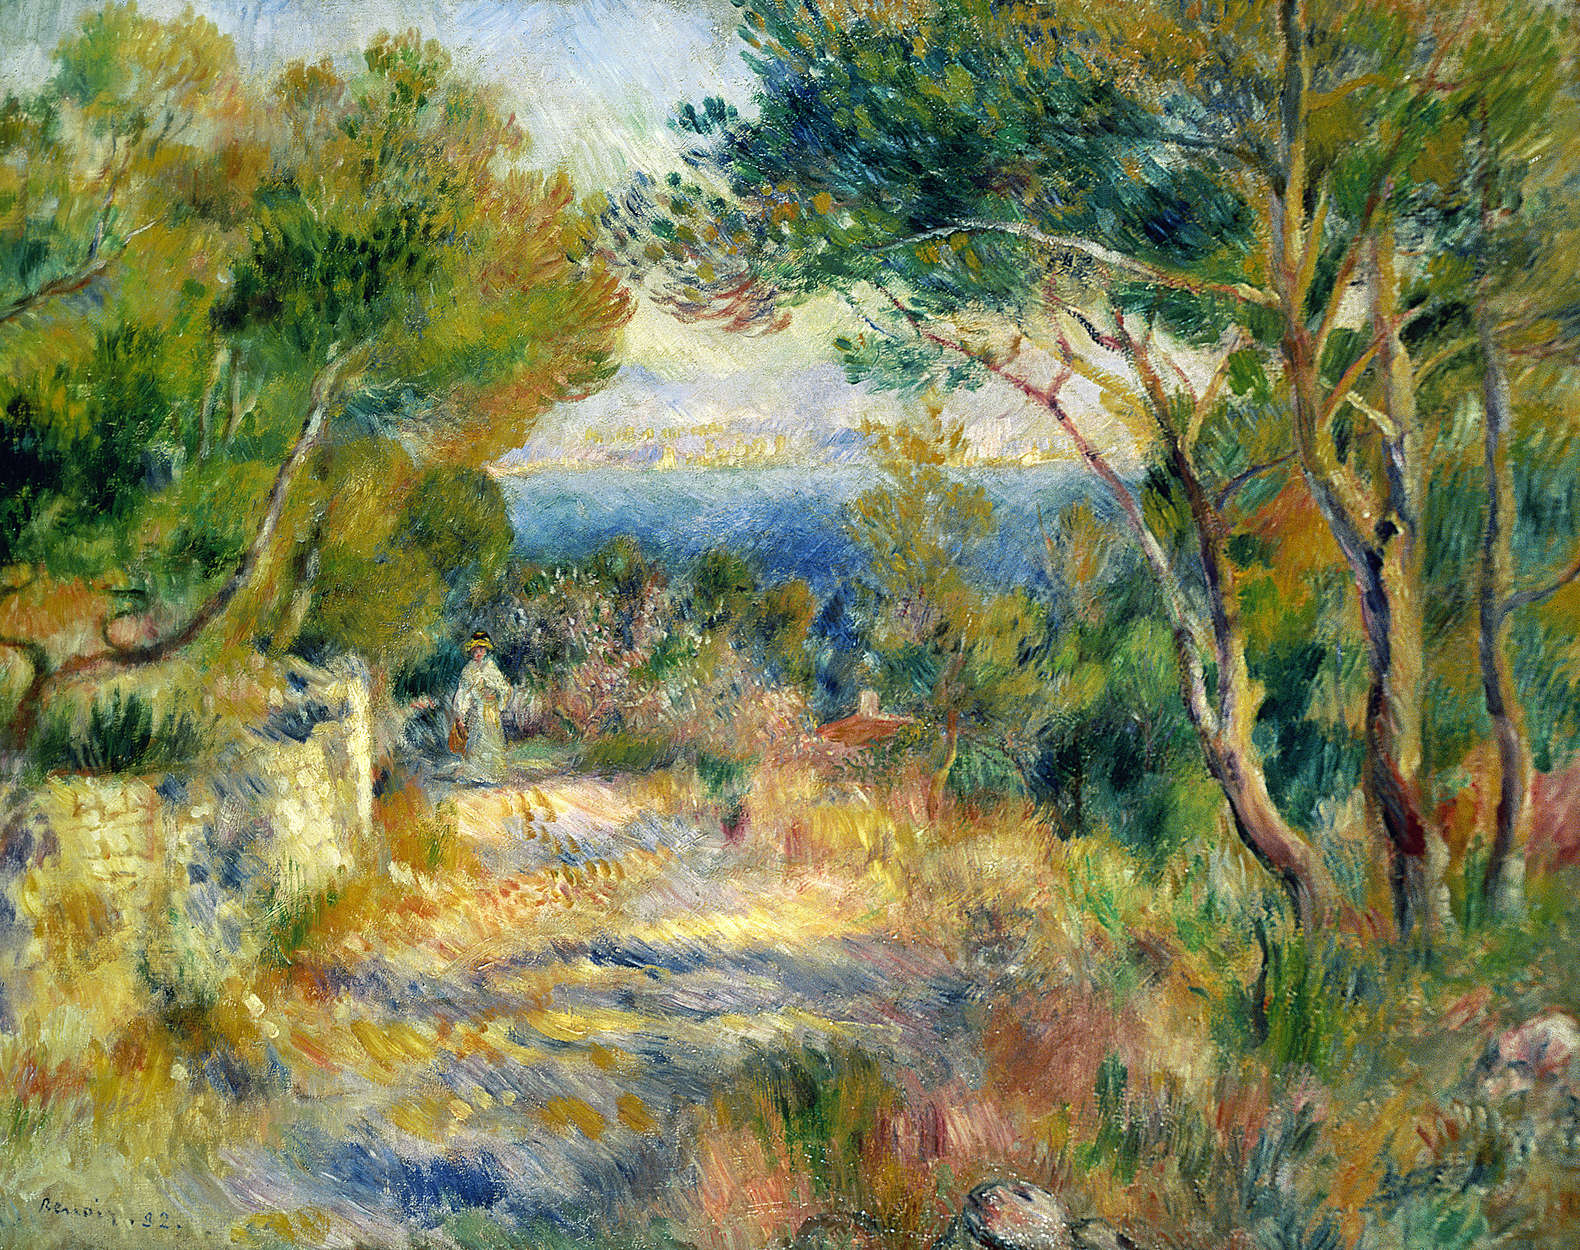             Fototapete "L'Estaque" von Pierre Auguste Renoir
        